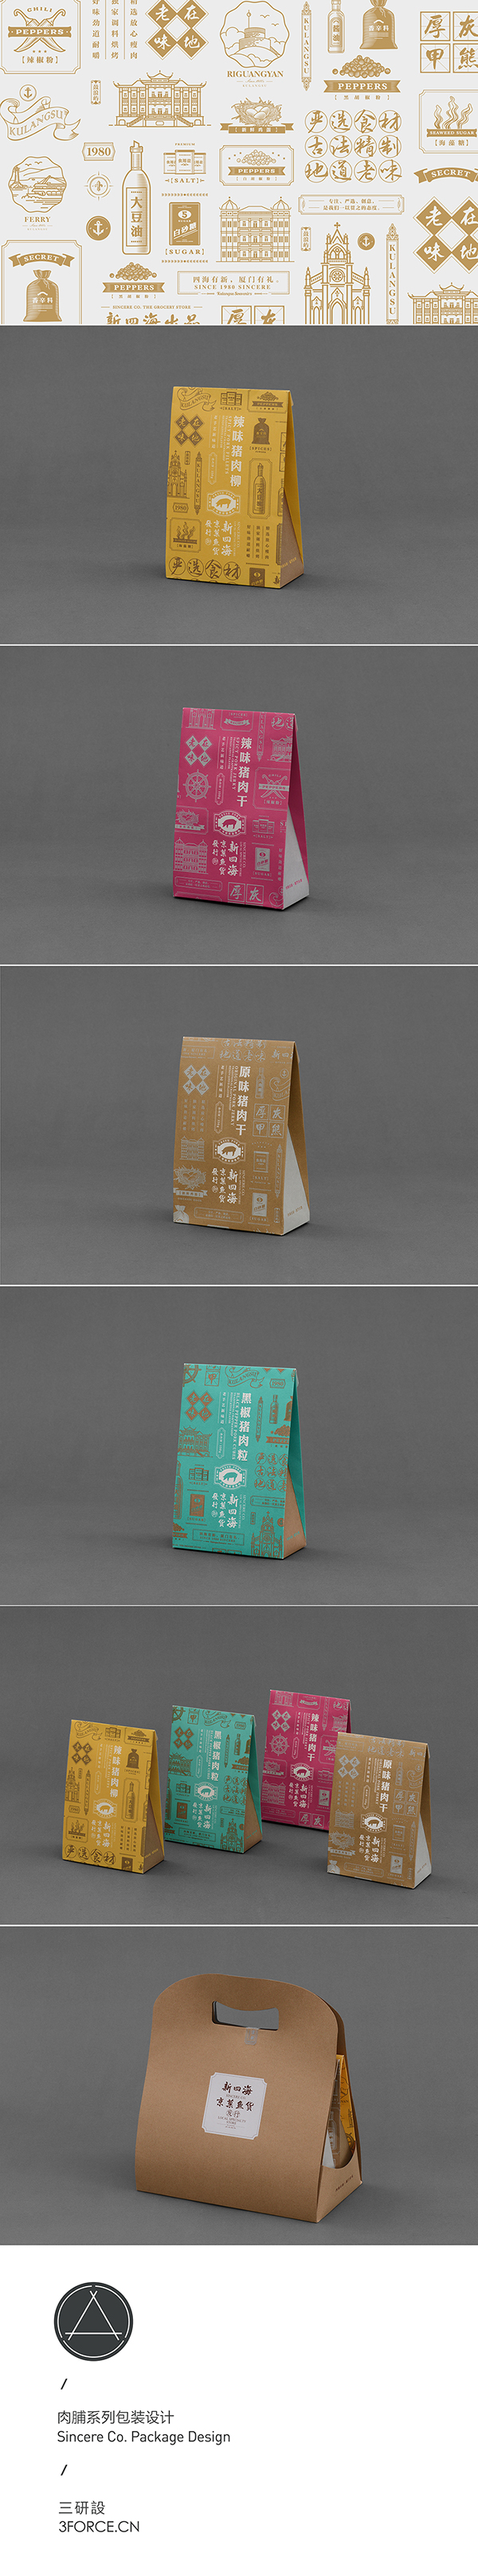 Pork Products Packaging Design / 新四海肉脯系列包裝